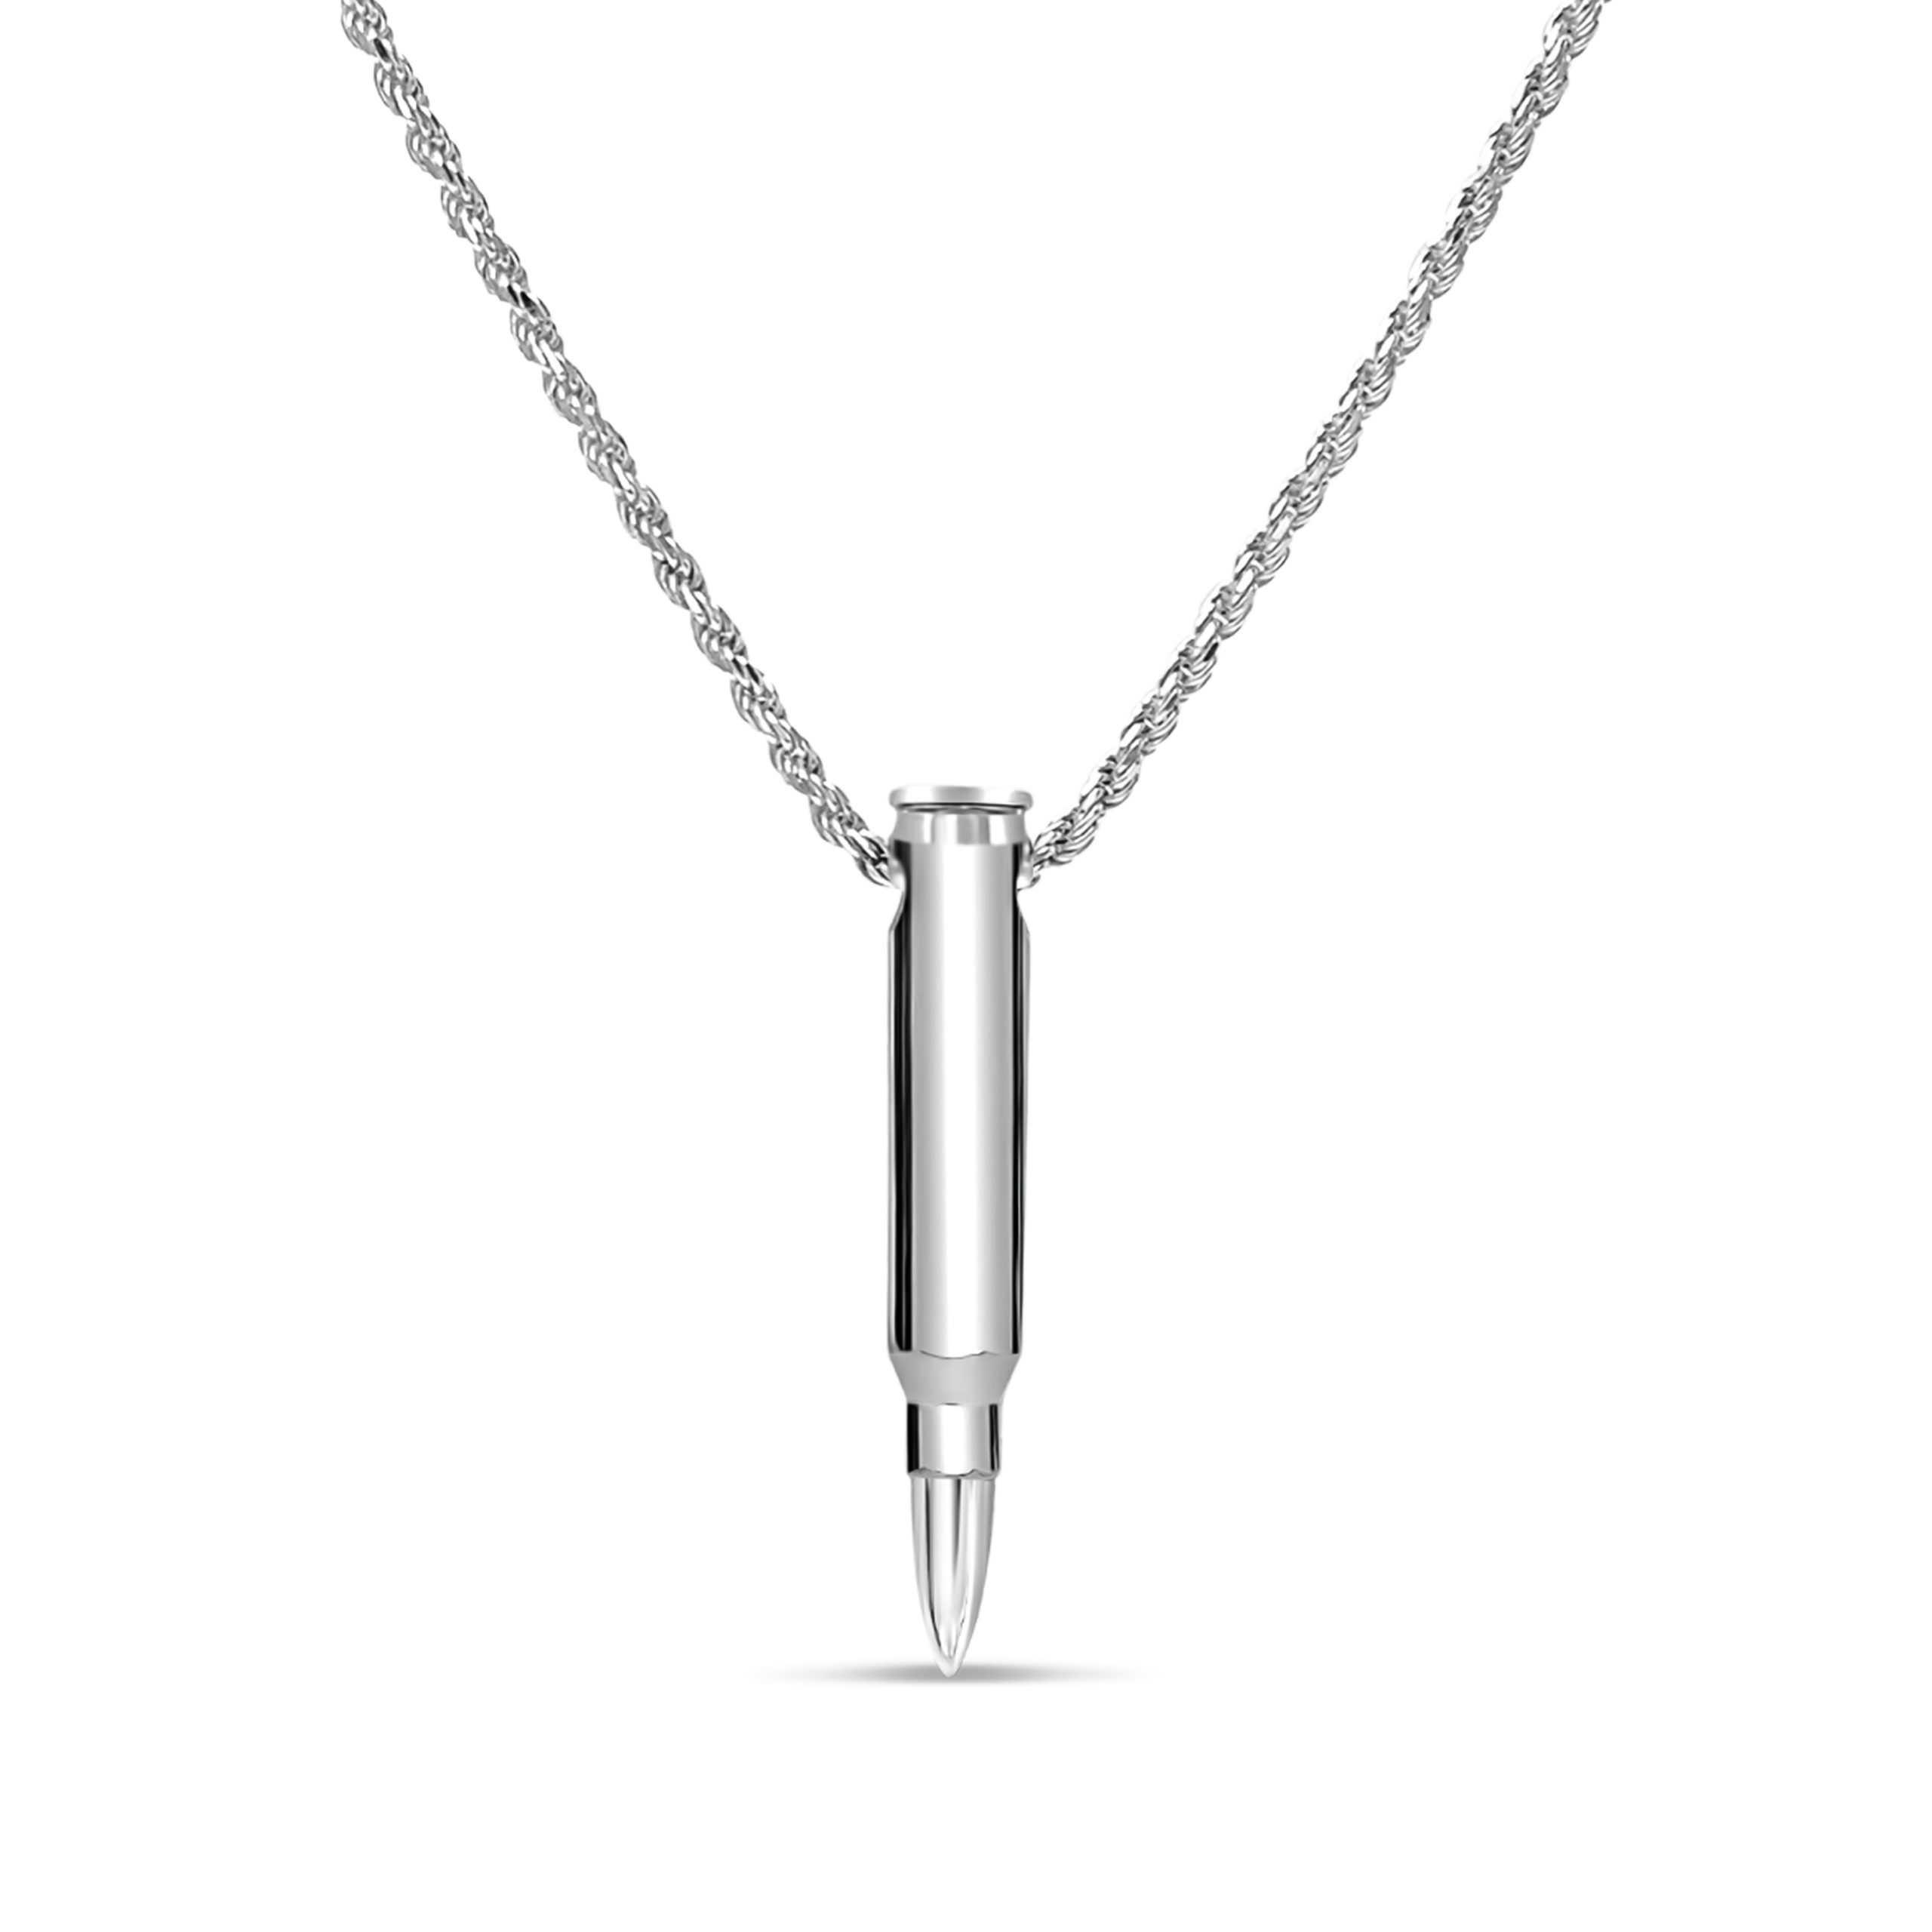 223 Bullet Necklace - Joe Wall Design